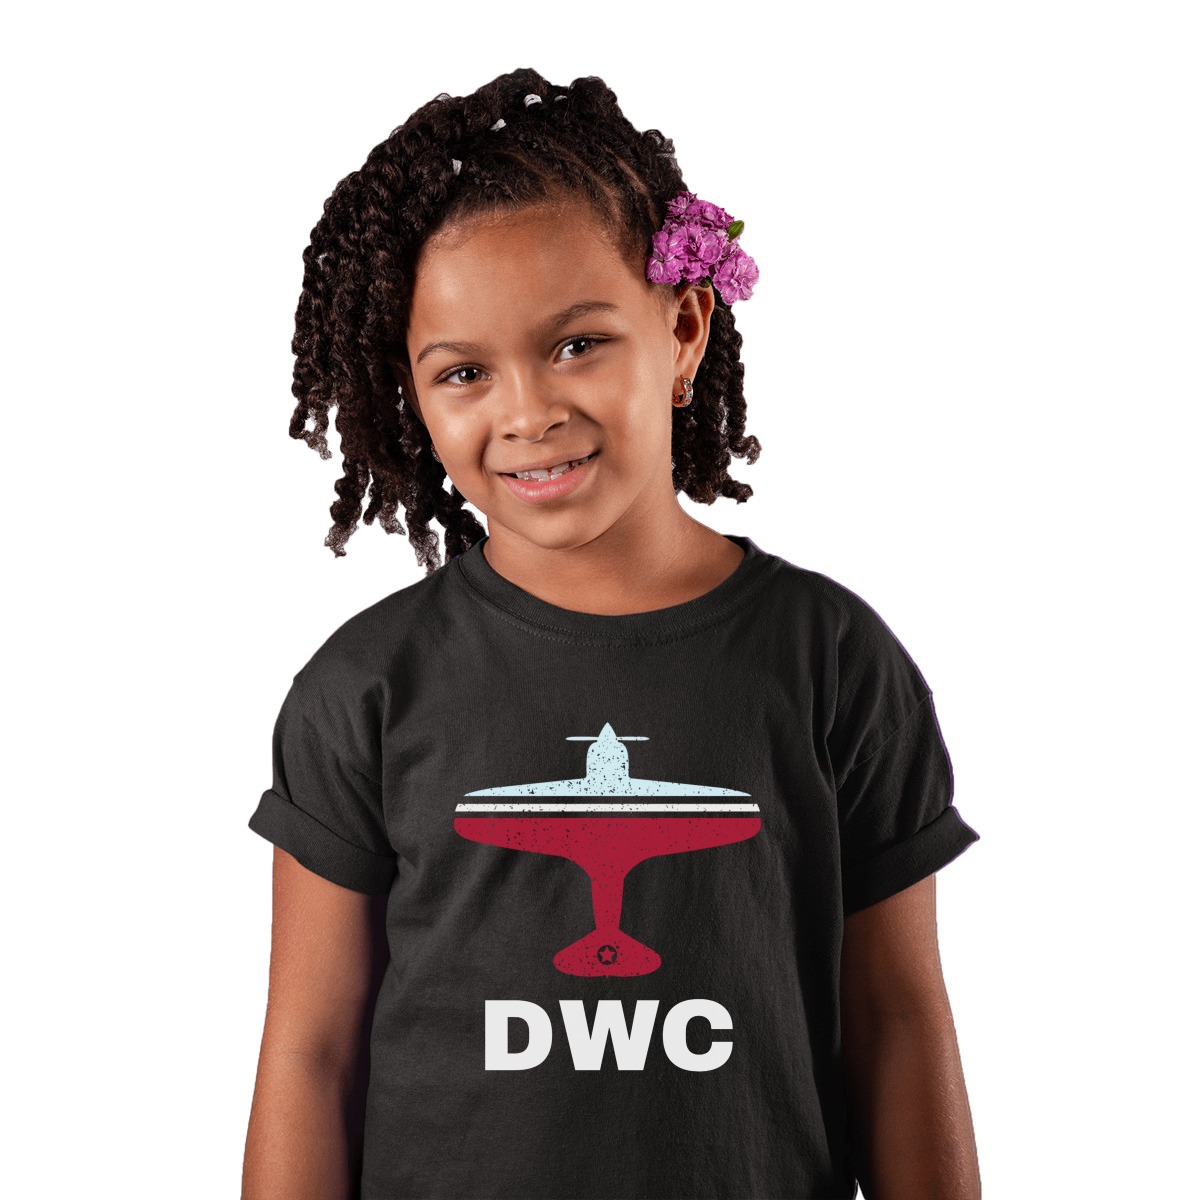 Fly Dubai DWC Airport  Kids T-shirt | Black